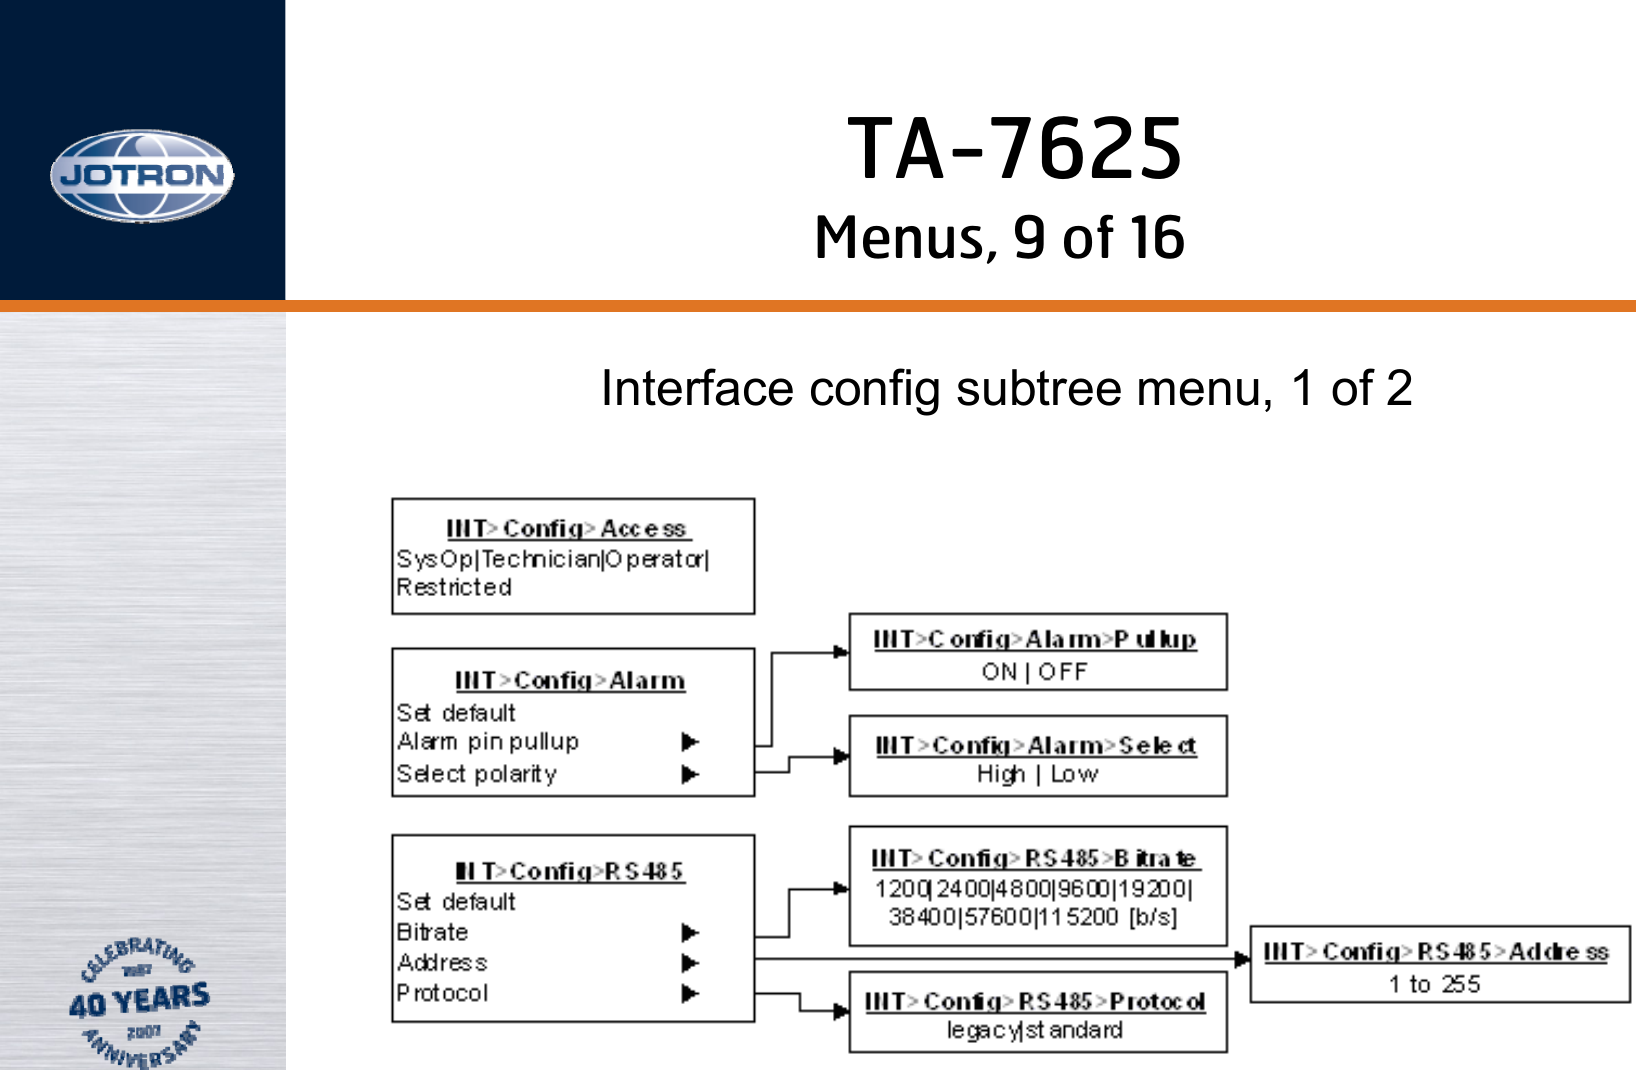 Menus, 9 of 16Interface config subtree menu, 1 of 2TA-7625